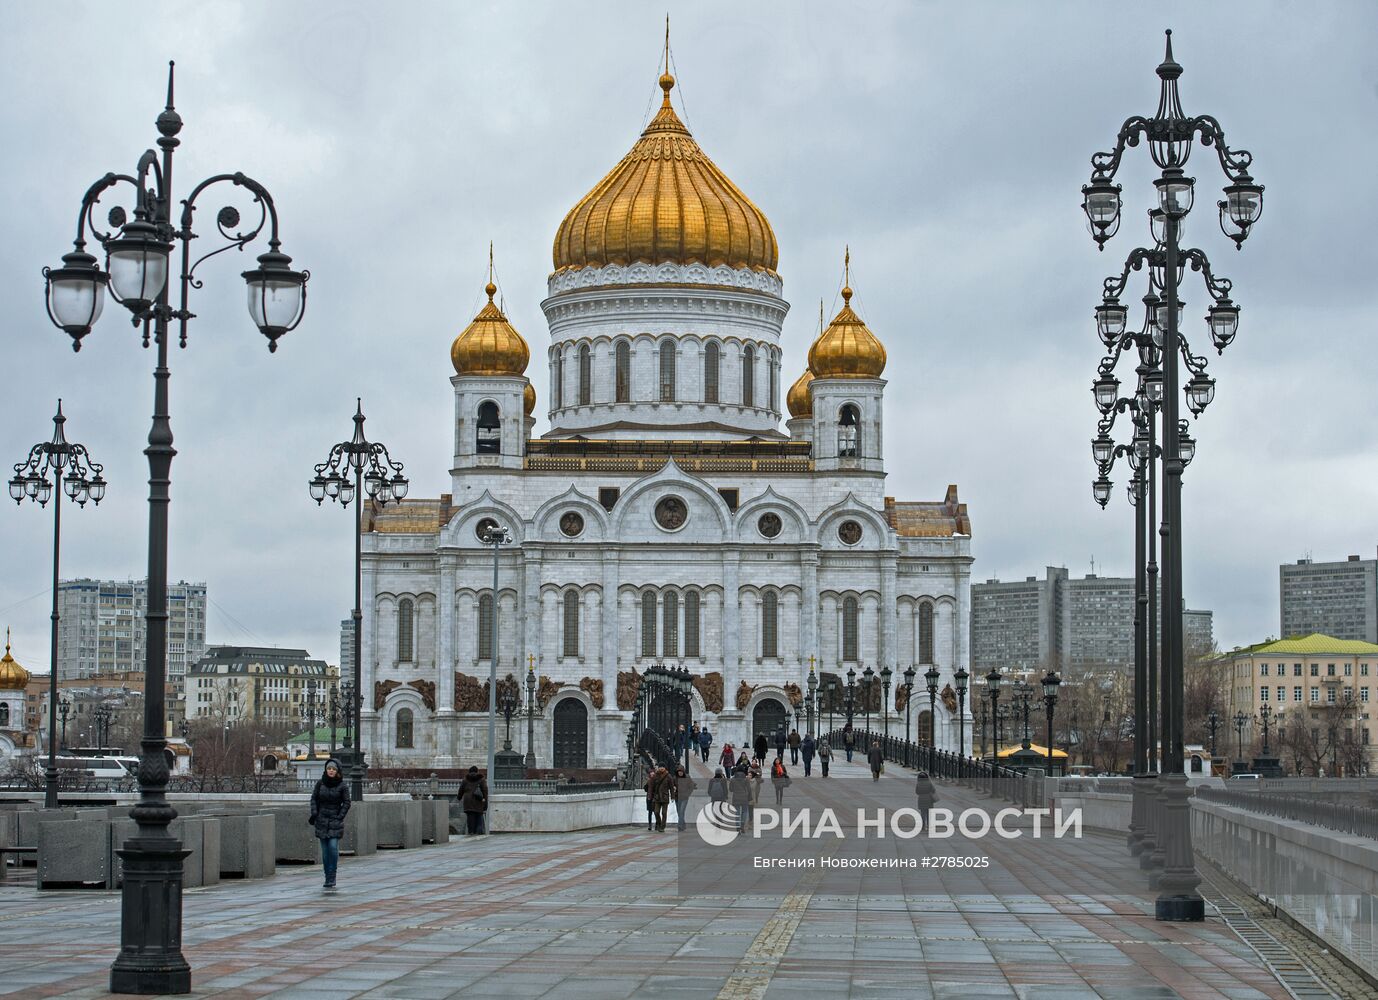 Храм Христа Спасителя в Москве.